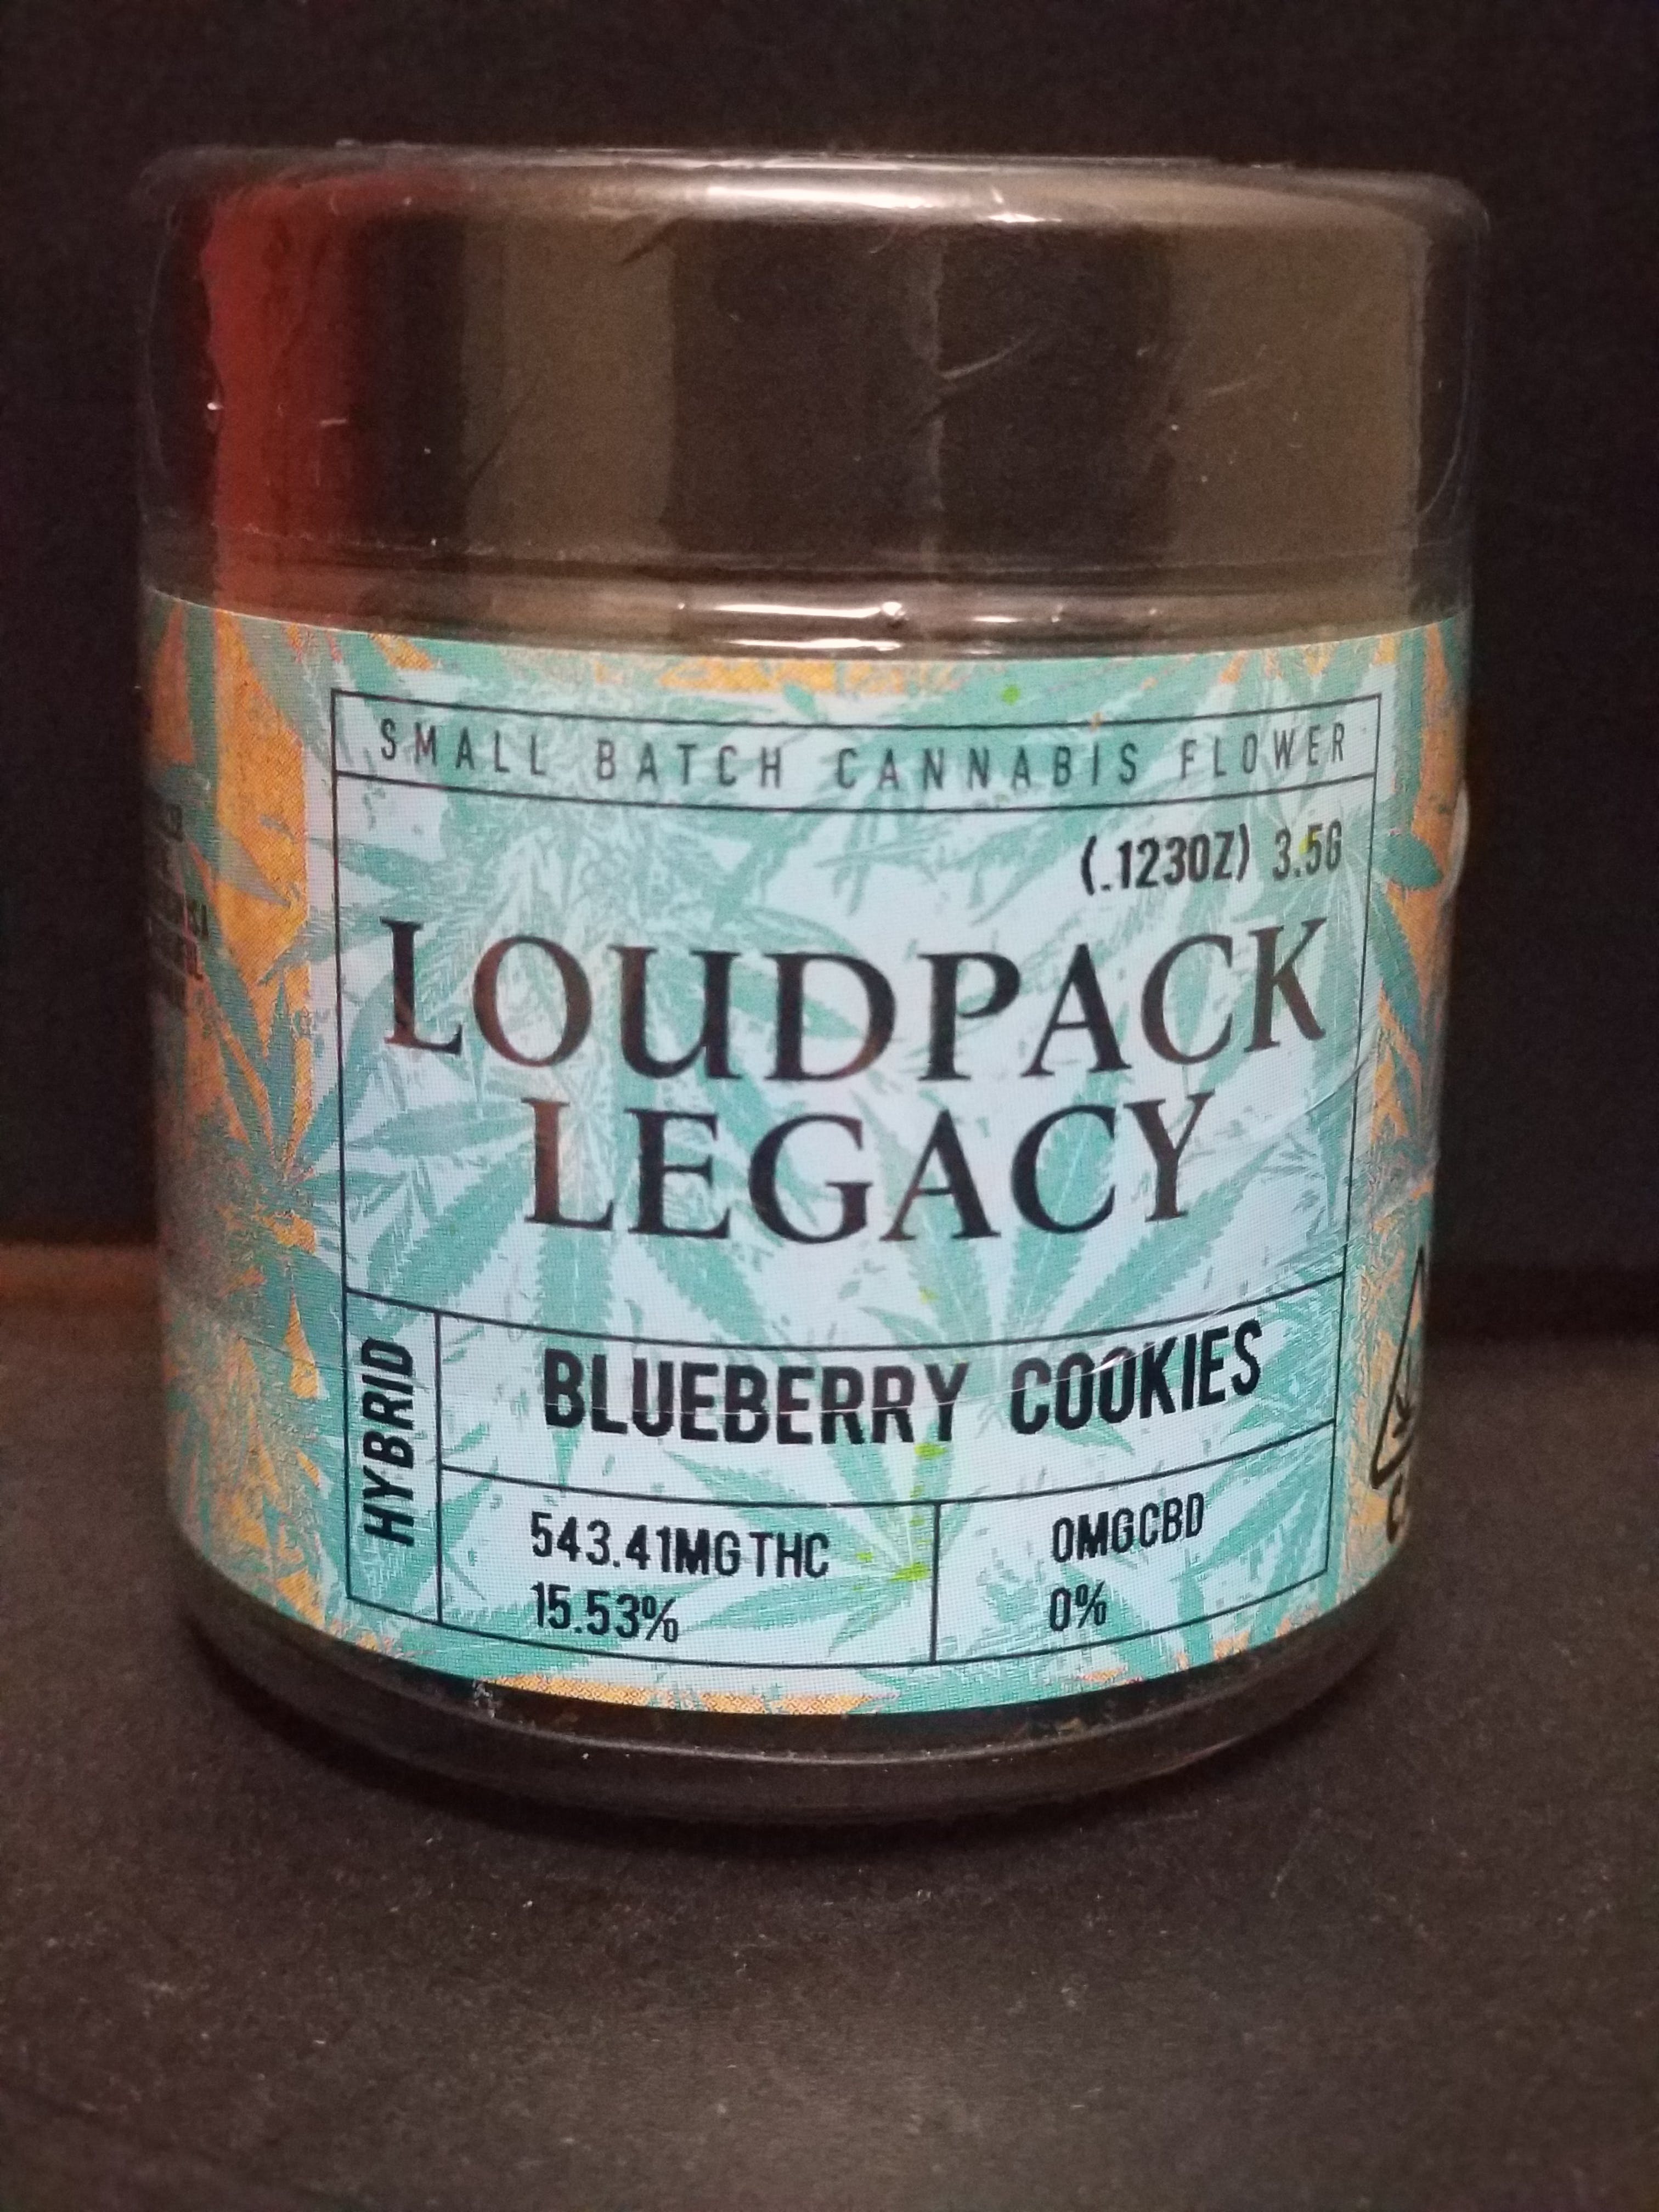 marijuana-dispensaries-house-of-organics-in-sacramento-loudpack-legacy-blueberry-cookies